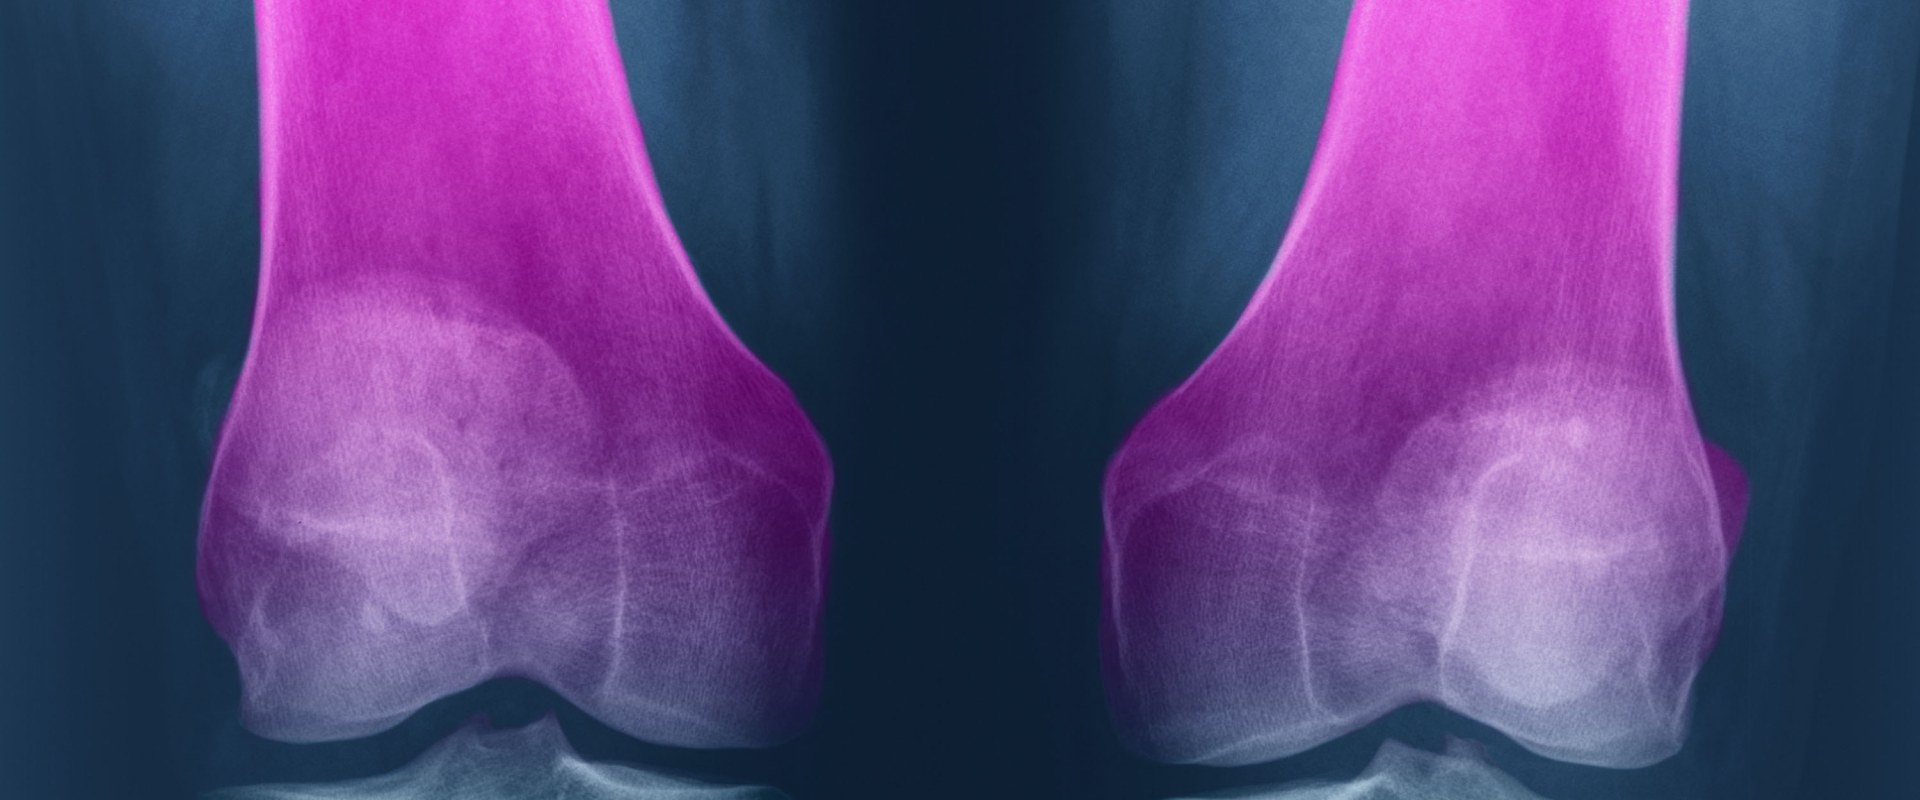 Does Glucosamine Really Help with Osteoarthritis?